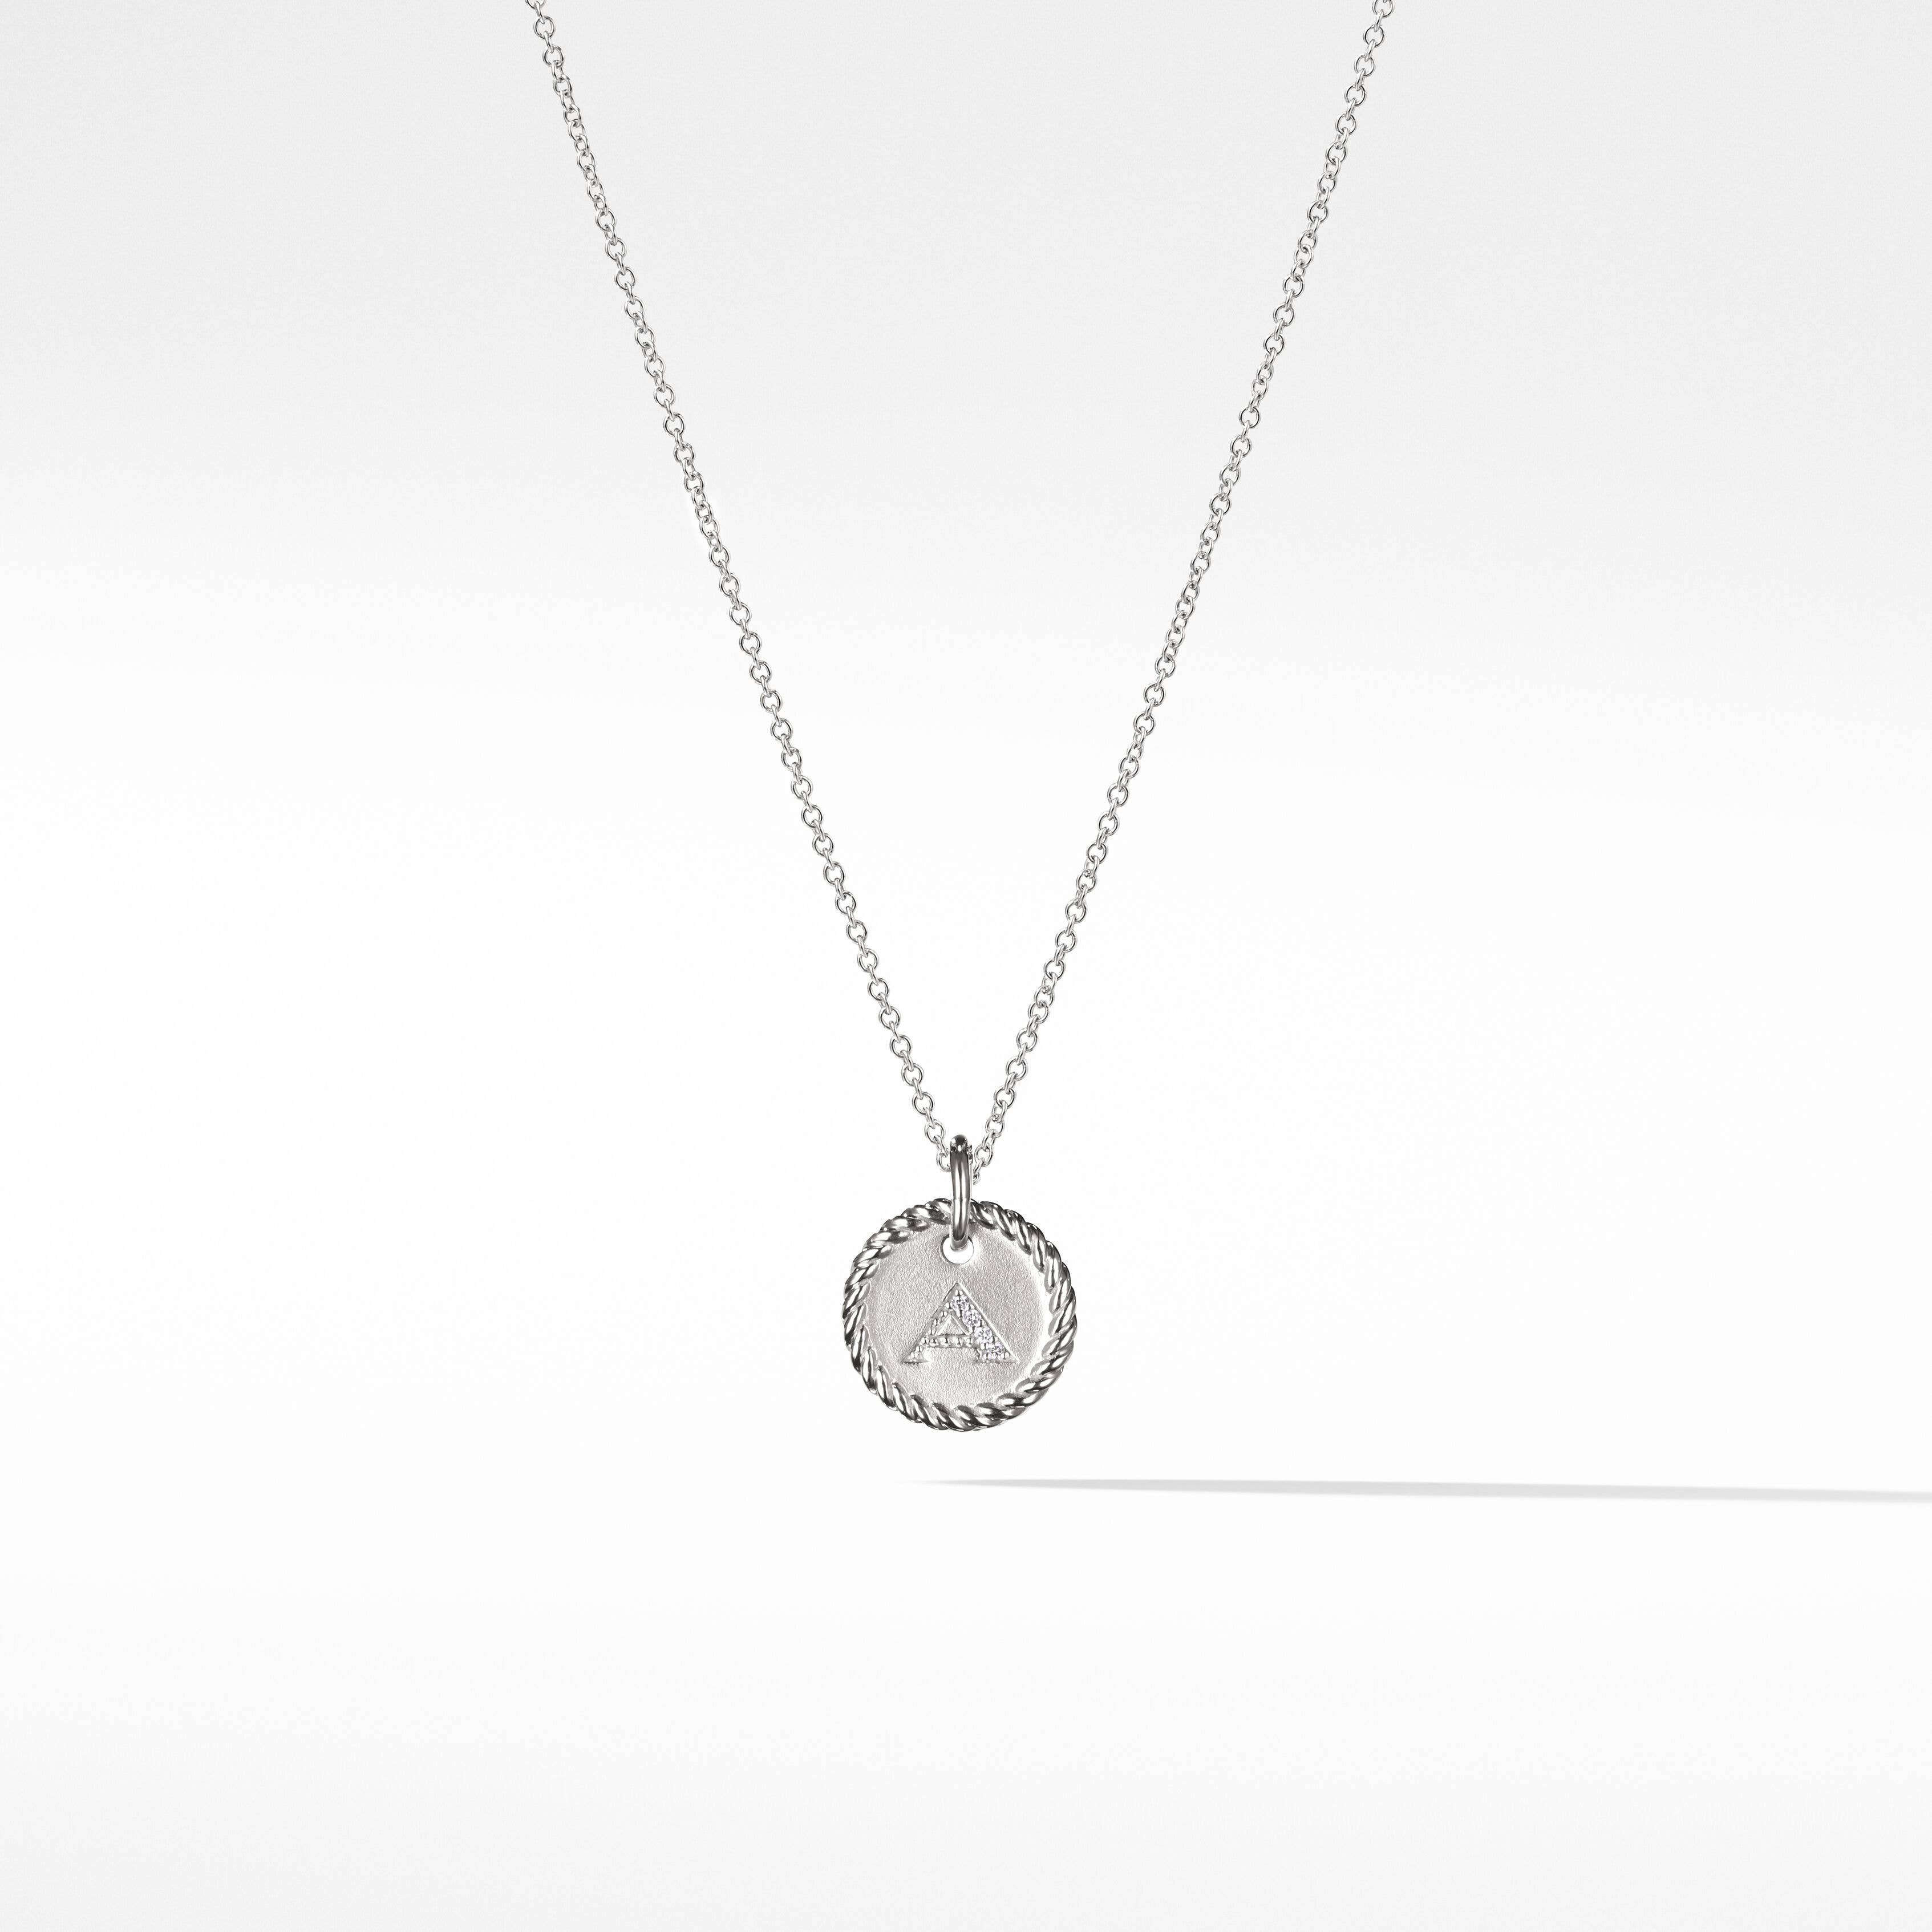 Brillar gravedad Credo A Initial Charm Necklace in 18K White Gold with Pavé Diamonds | David Yurman